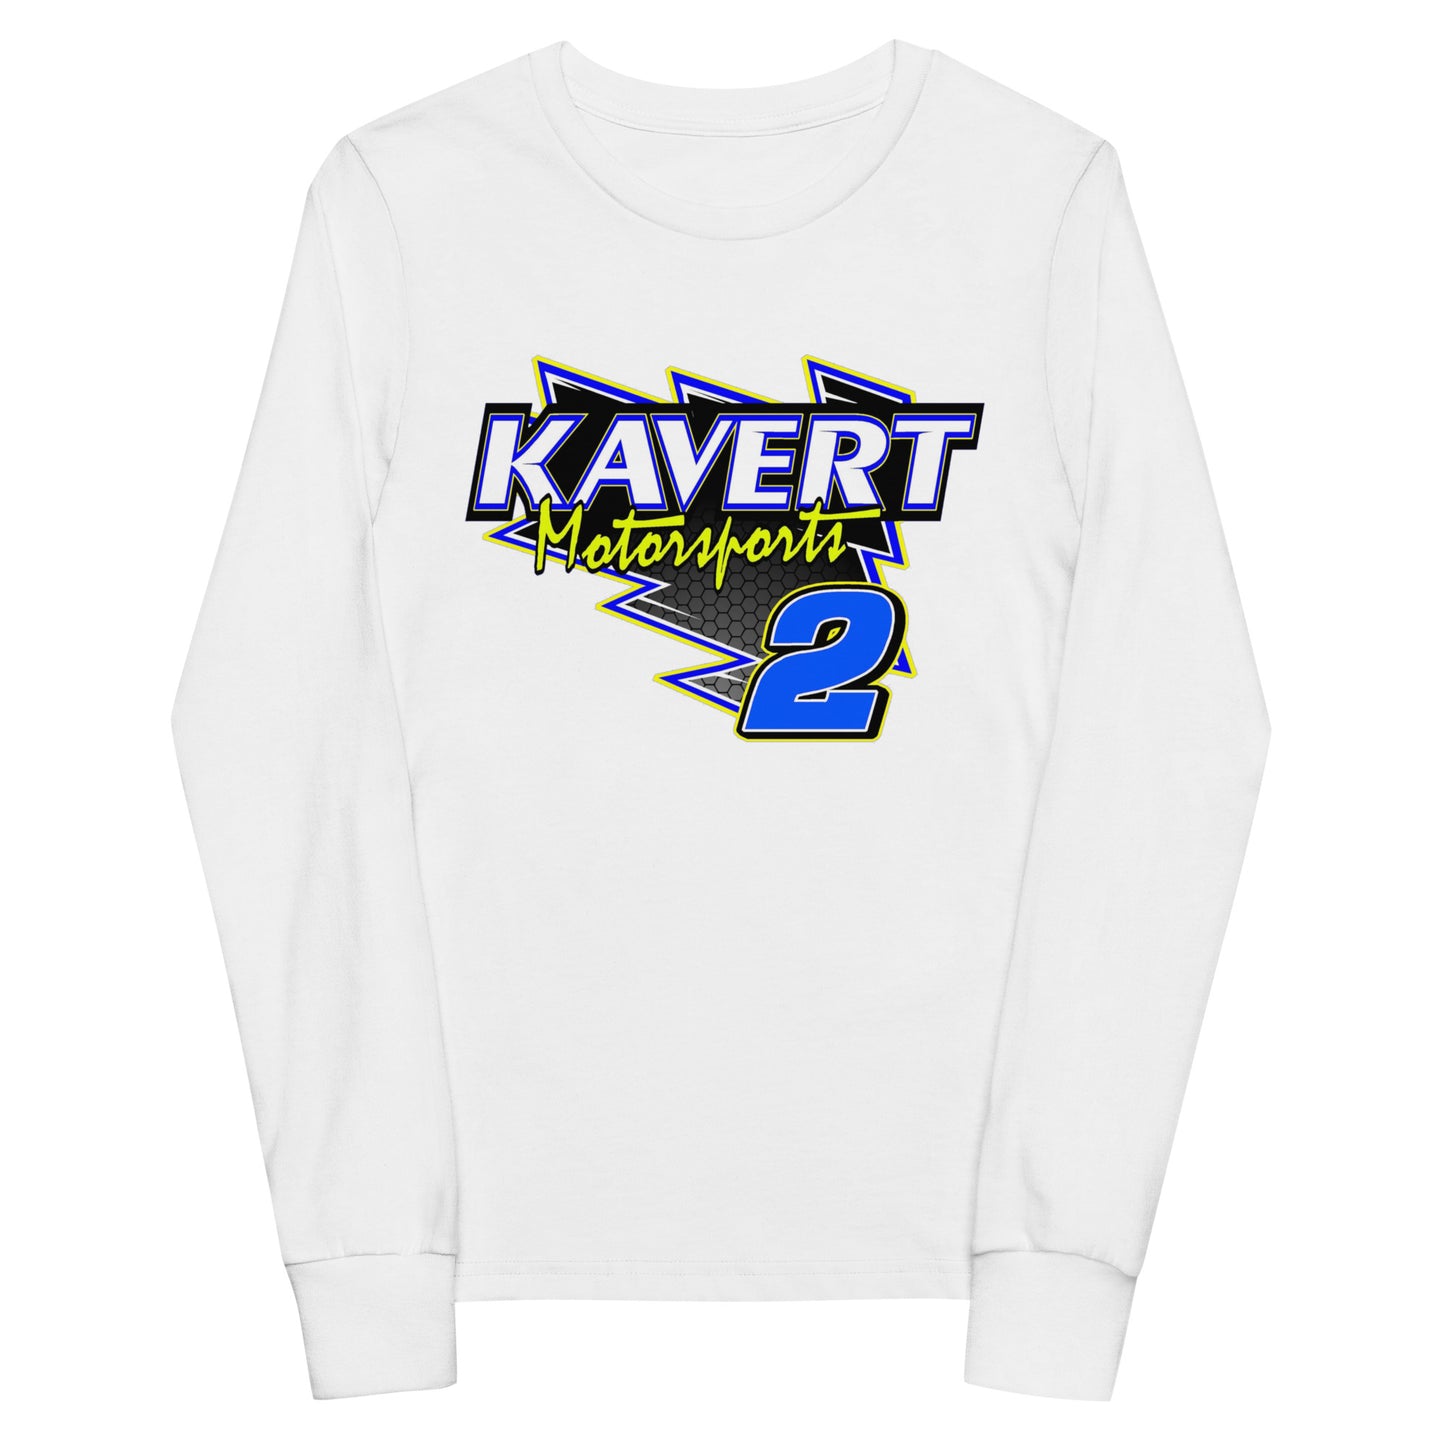 Kavert Motorsports Kids Long Sleeve